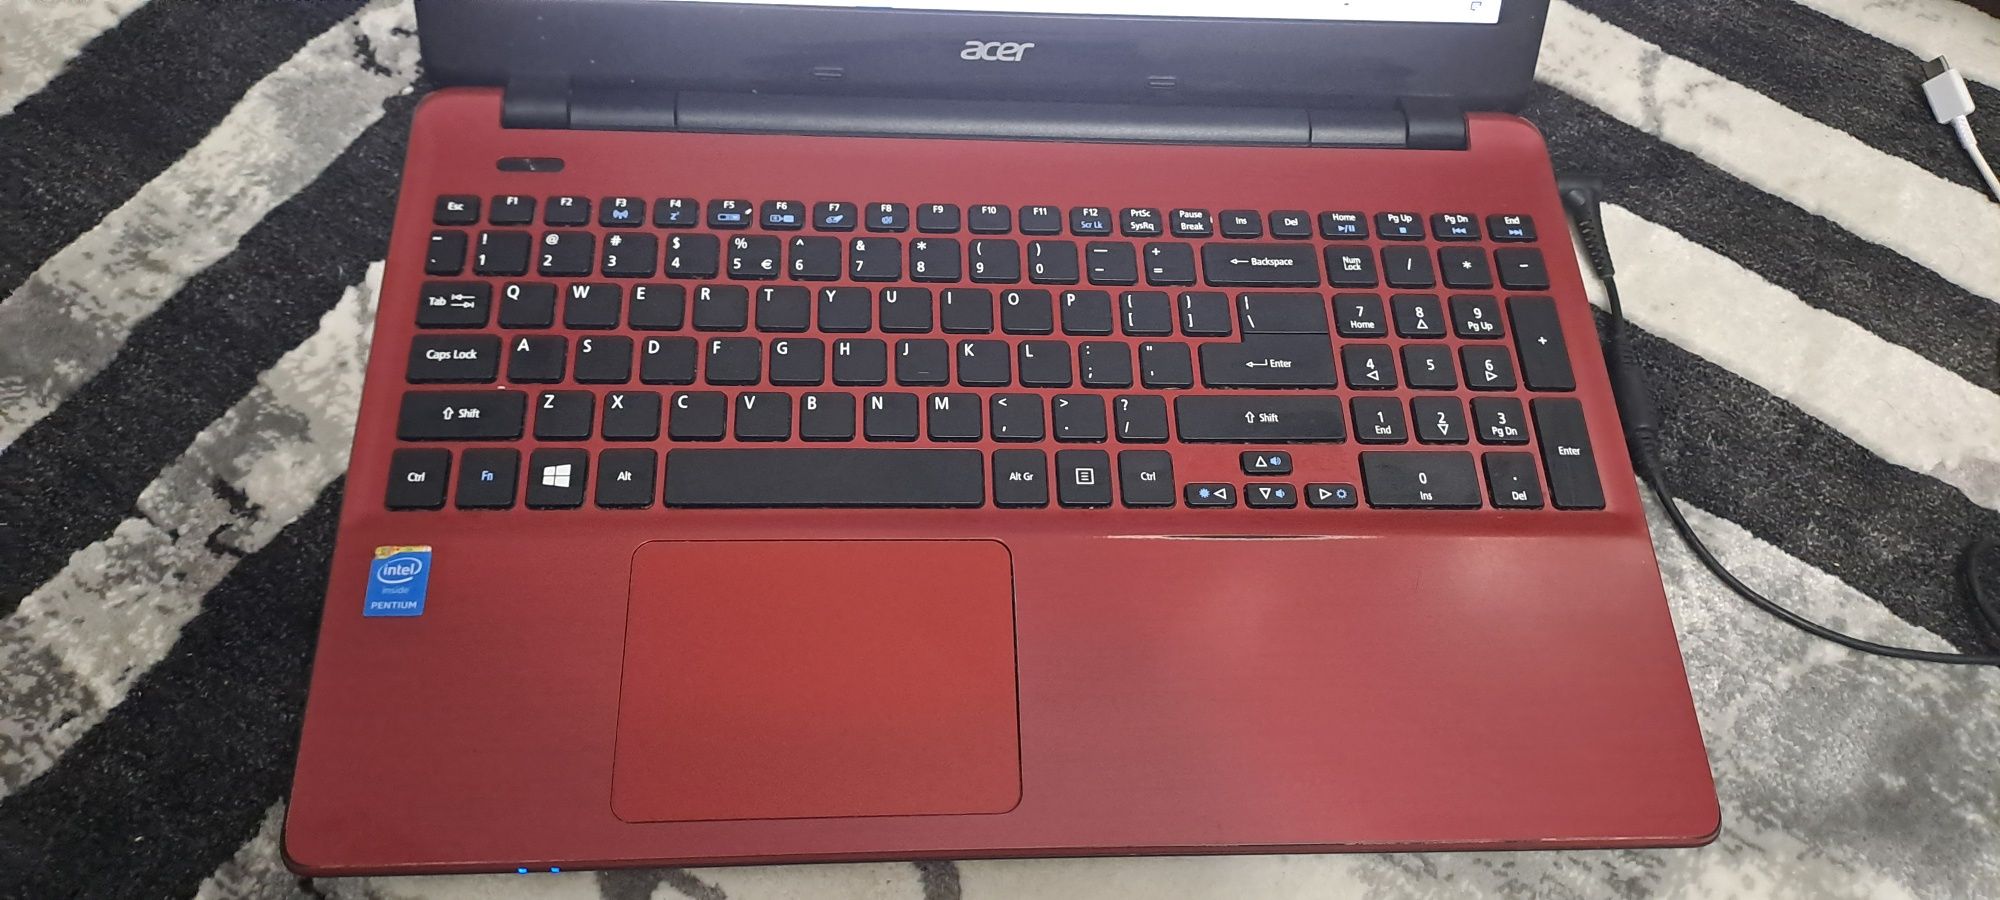 Laptop Acer : core2duo / 4 gb ram / 500 gb hard